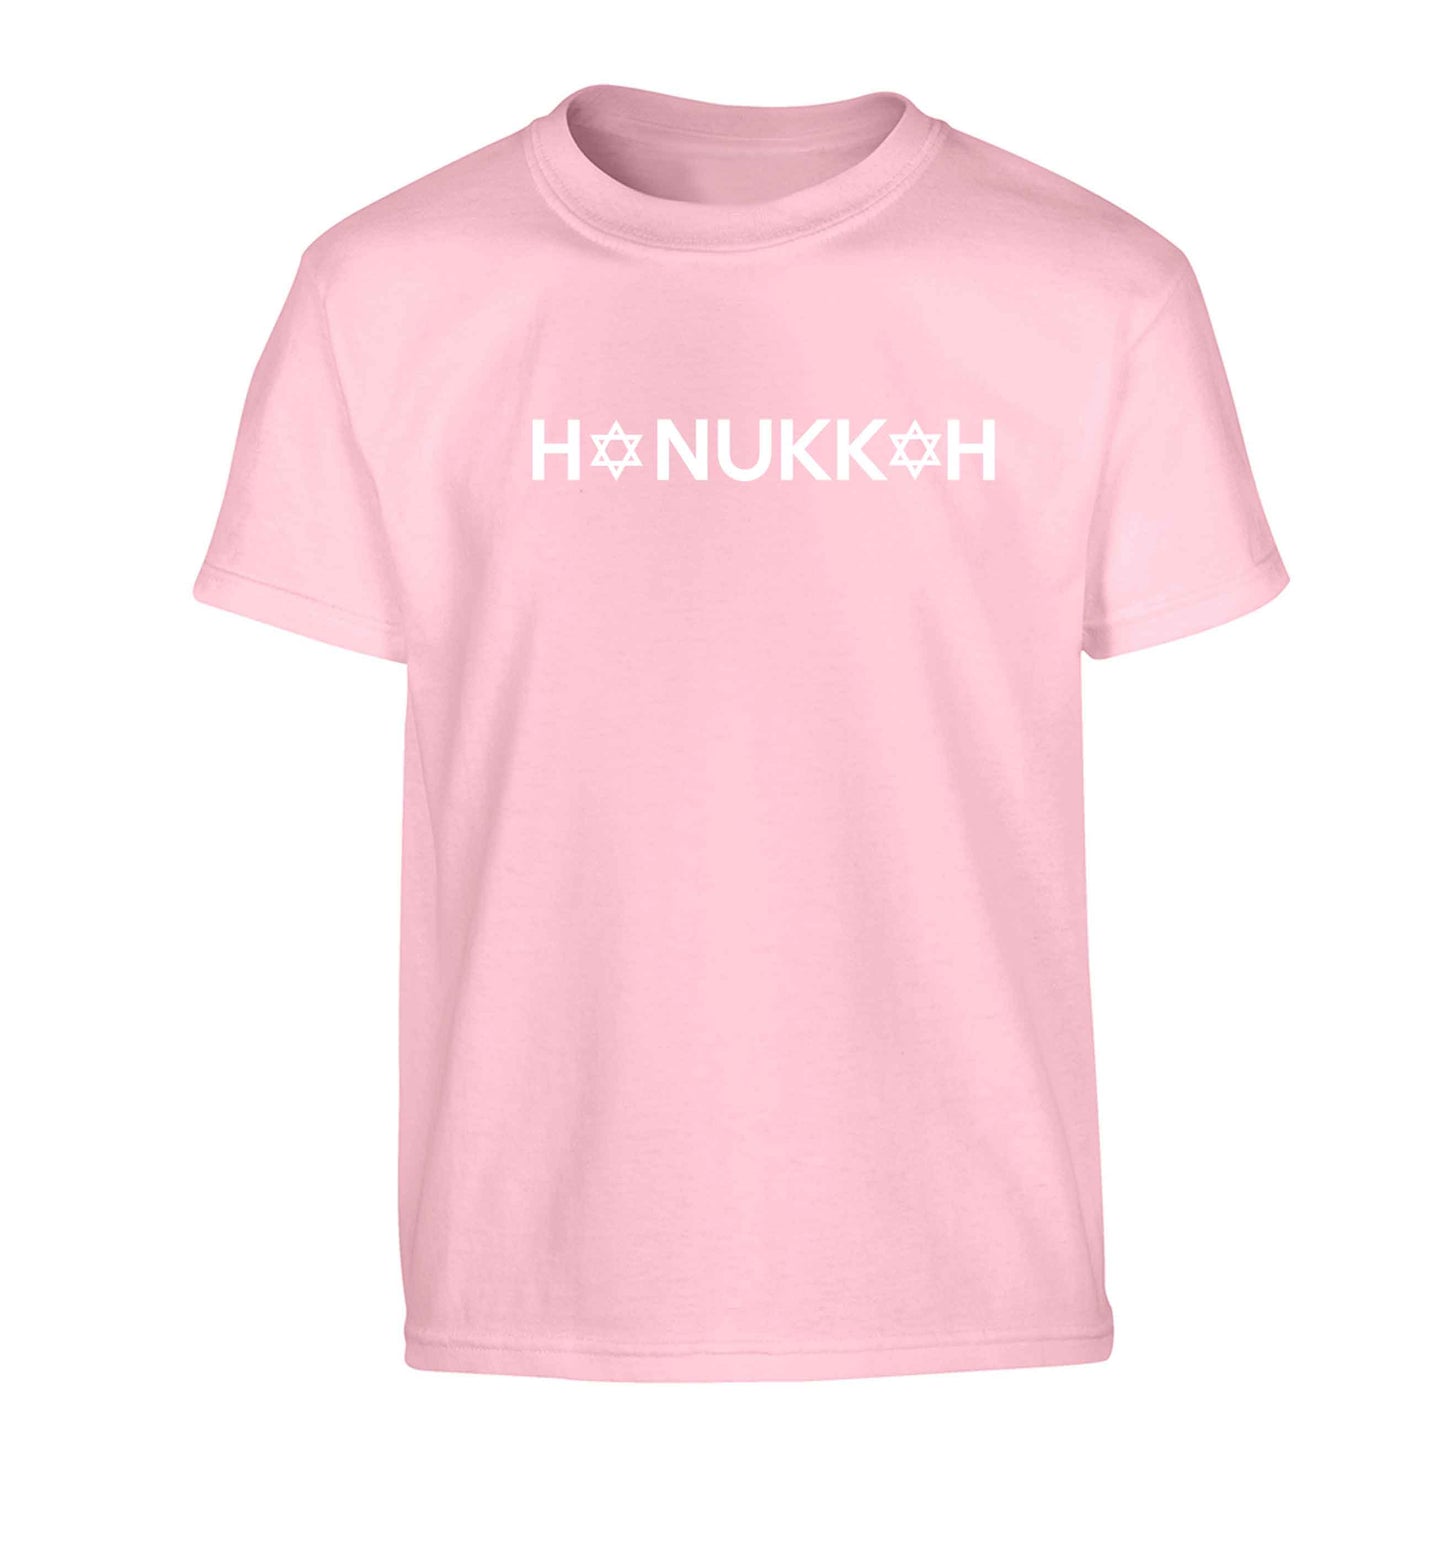 Hanukkah star of david Children's light pink Tshirt 12-13 Years